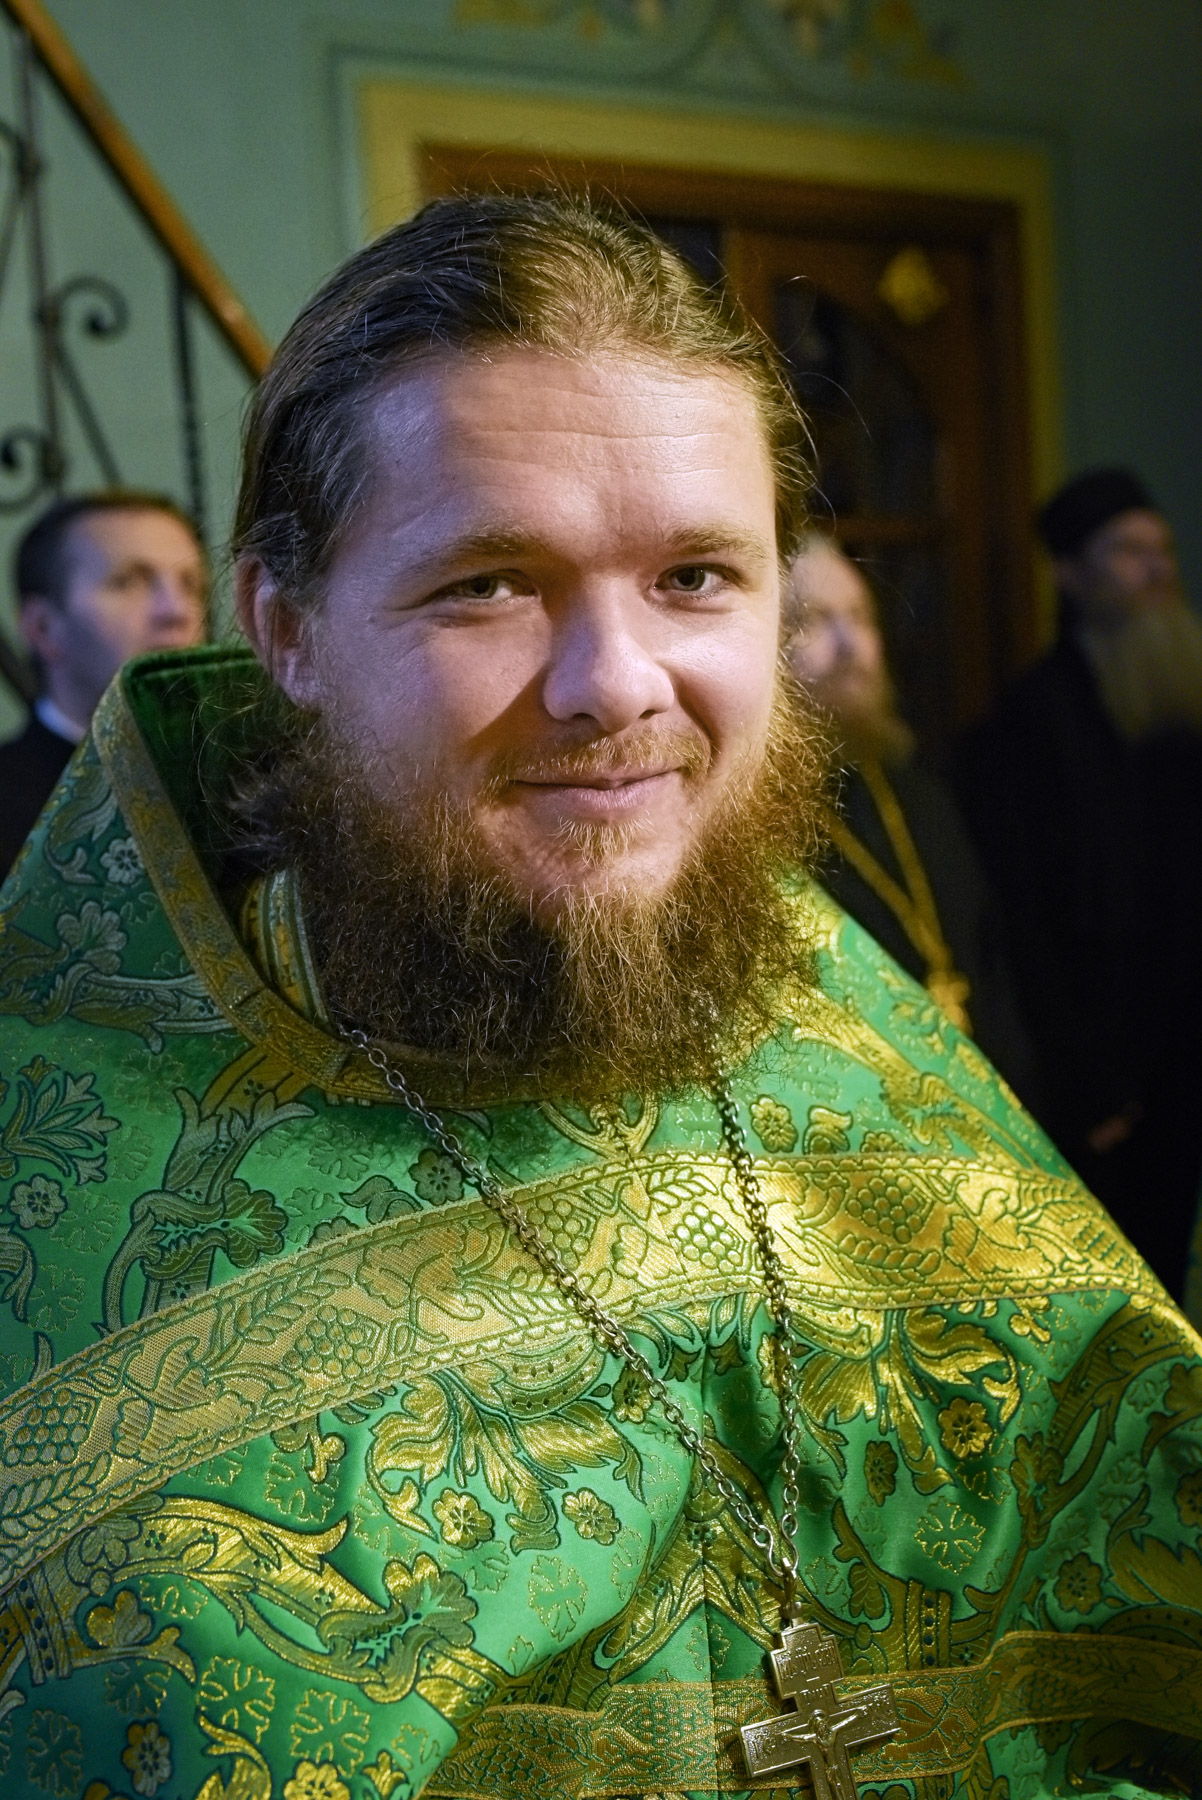 photos of orthodox christmas 0154 2